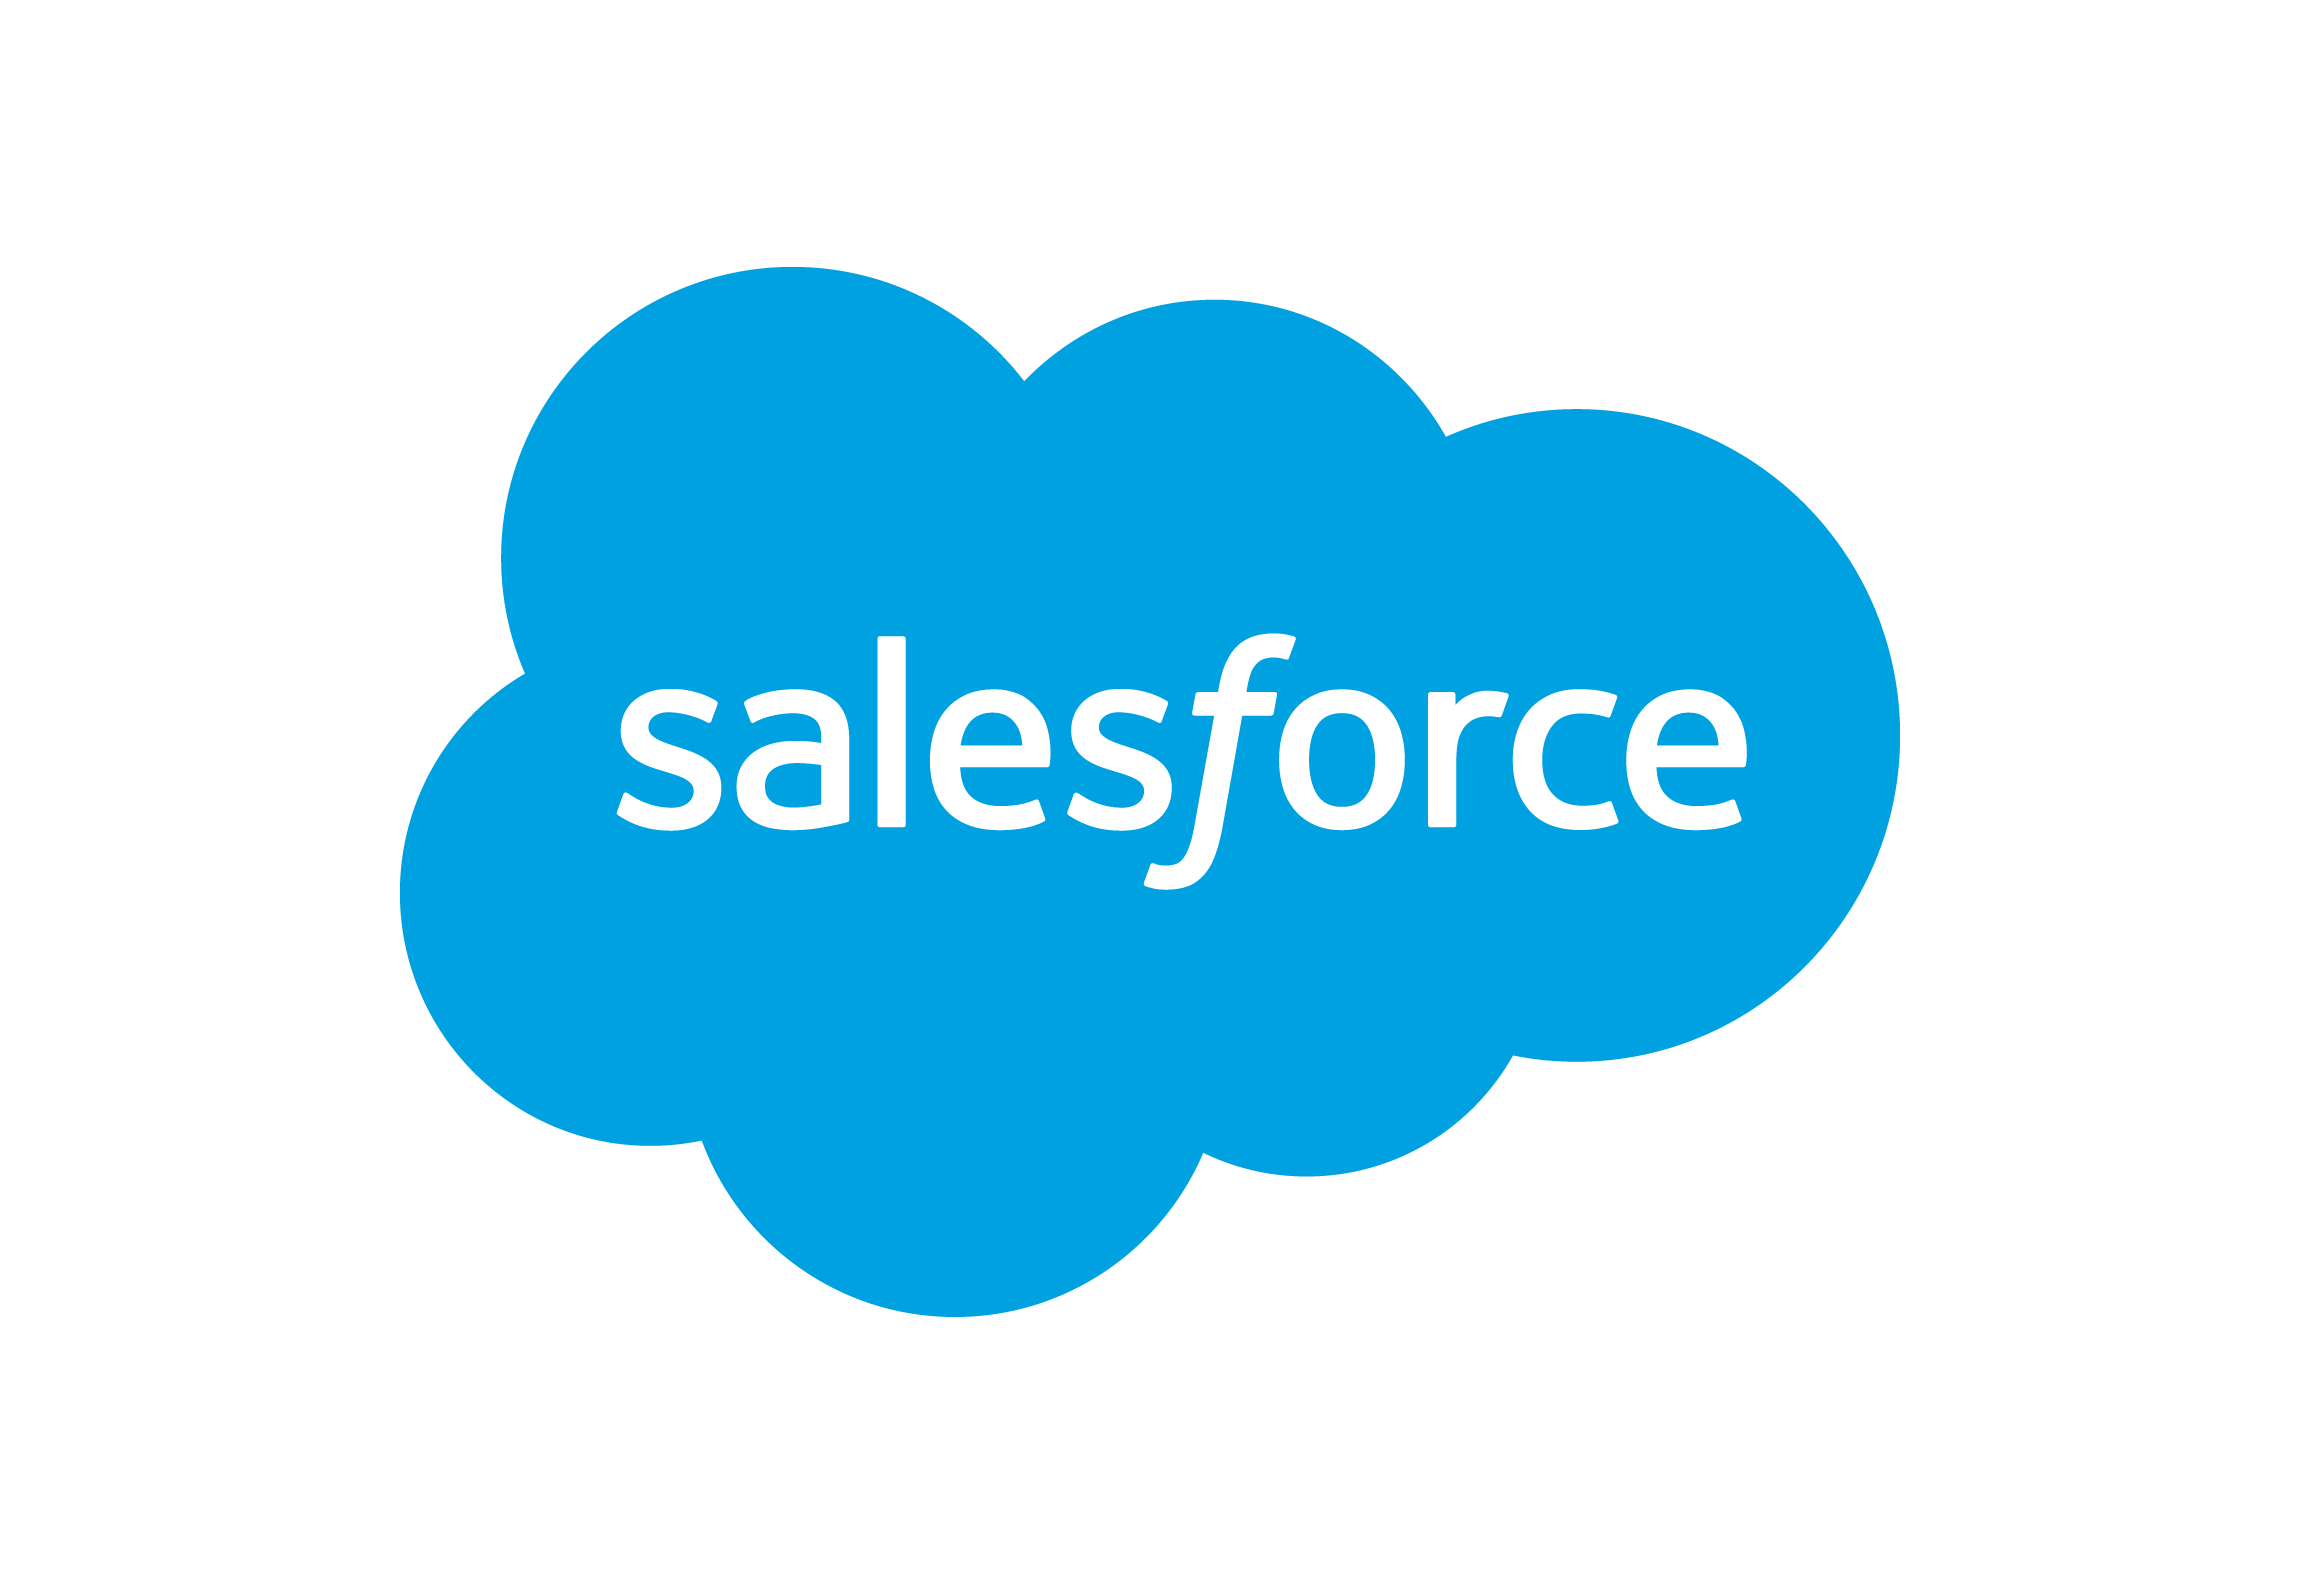 salesforce-logo-vector-png-salesforce-logo-png-2300